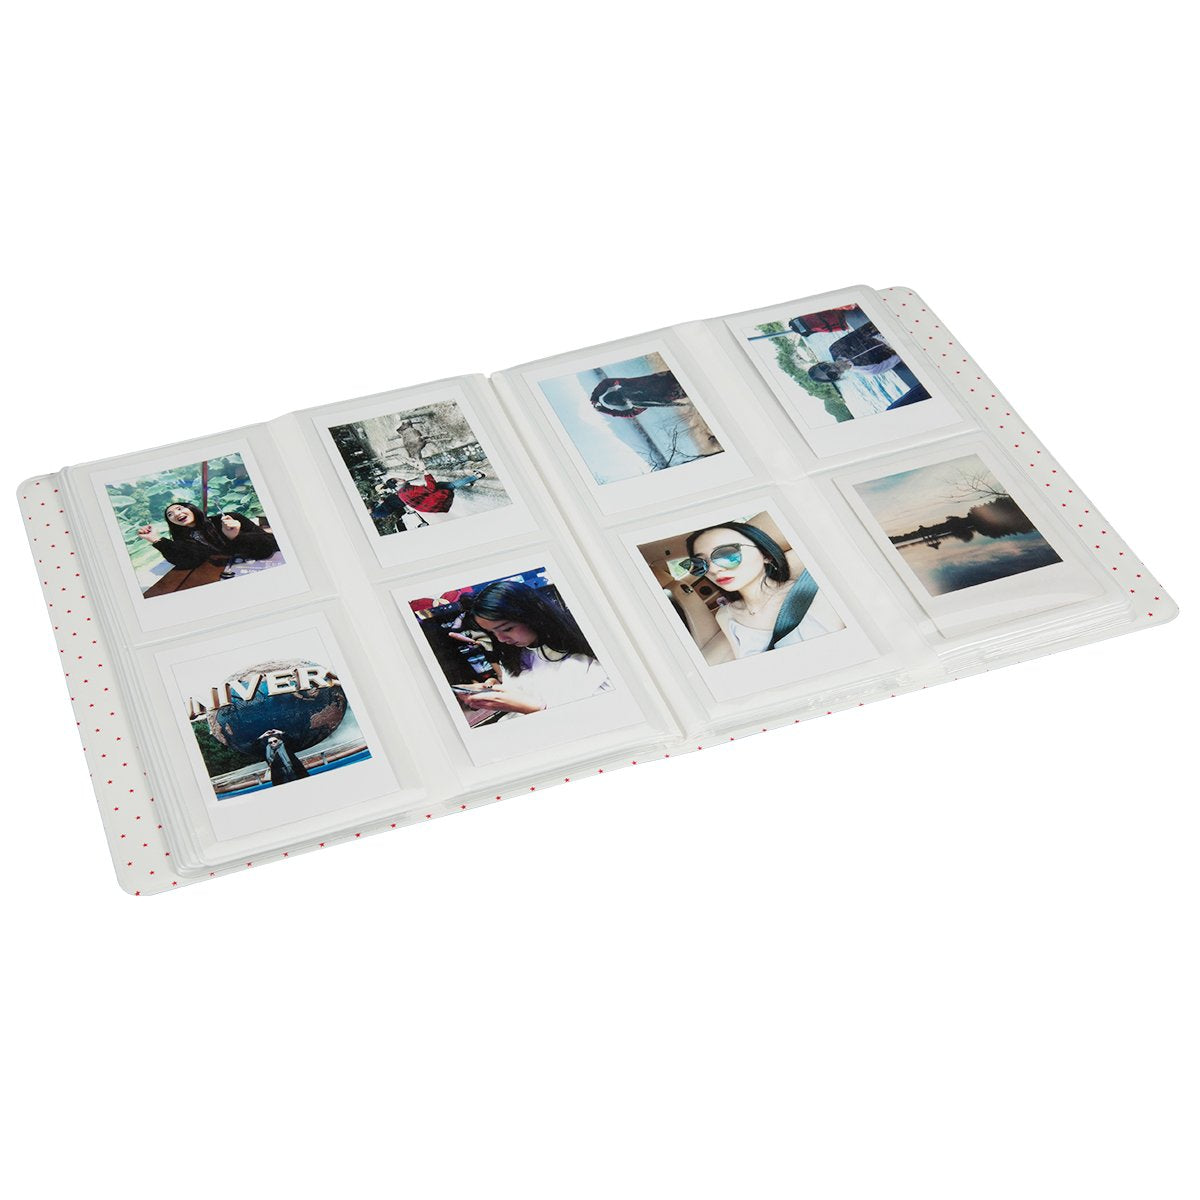 Fujifilm Instax Mini 6 Pack 10 Sheets Instant Film With 128-sheet Album for mini film (FLAMINGO PINK)